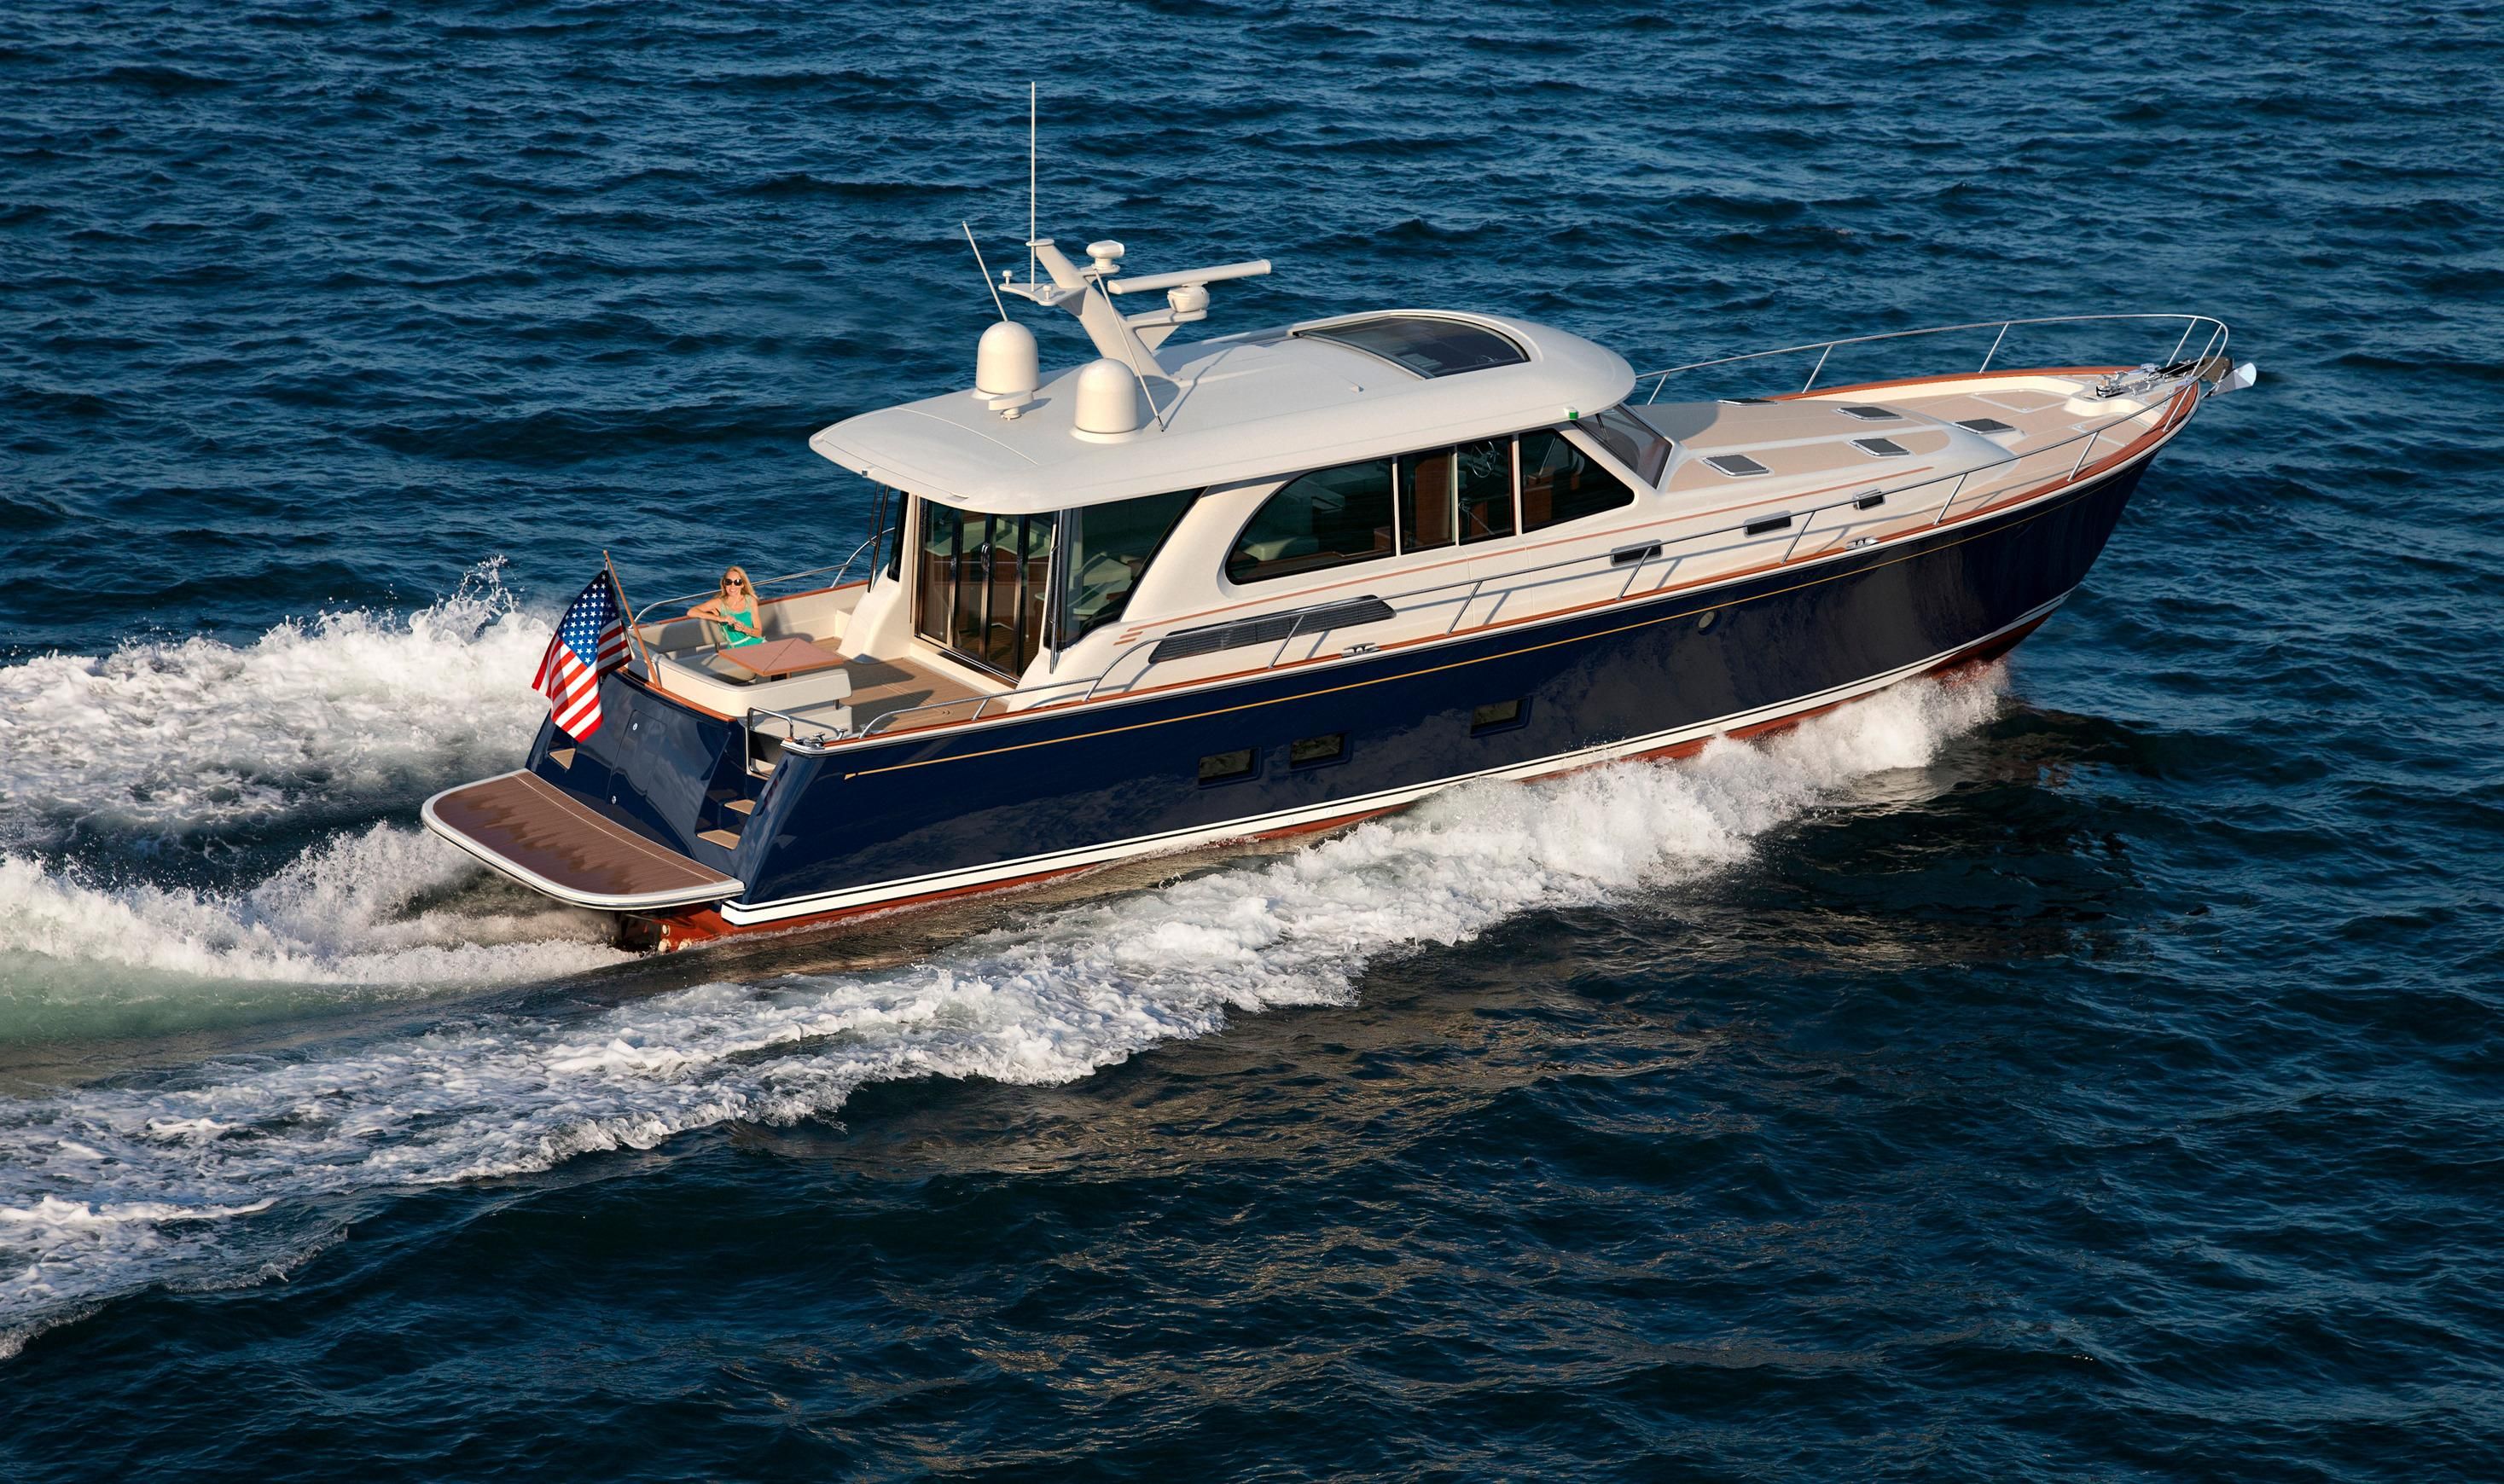 2019 Sabre 66 Dirigo Power Boat For Sale - www.yachtworld.com